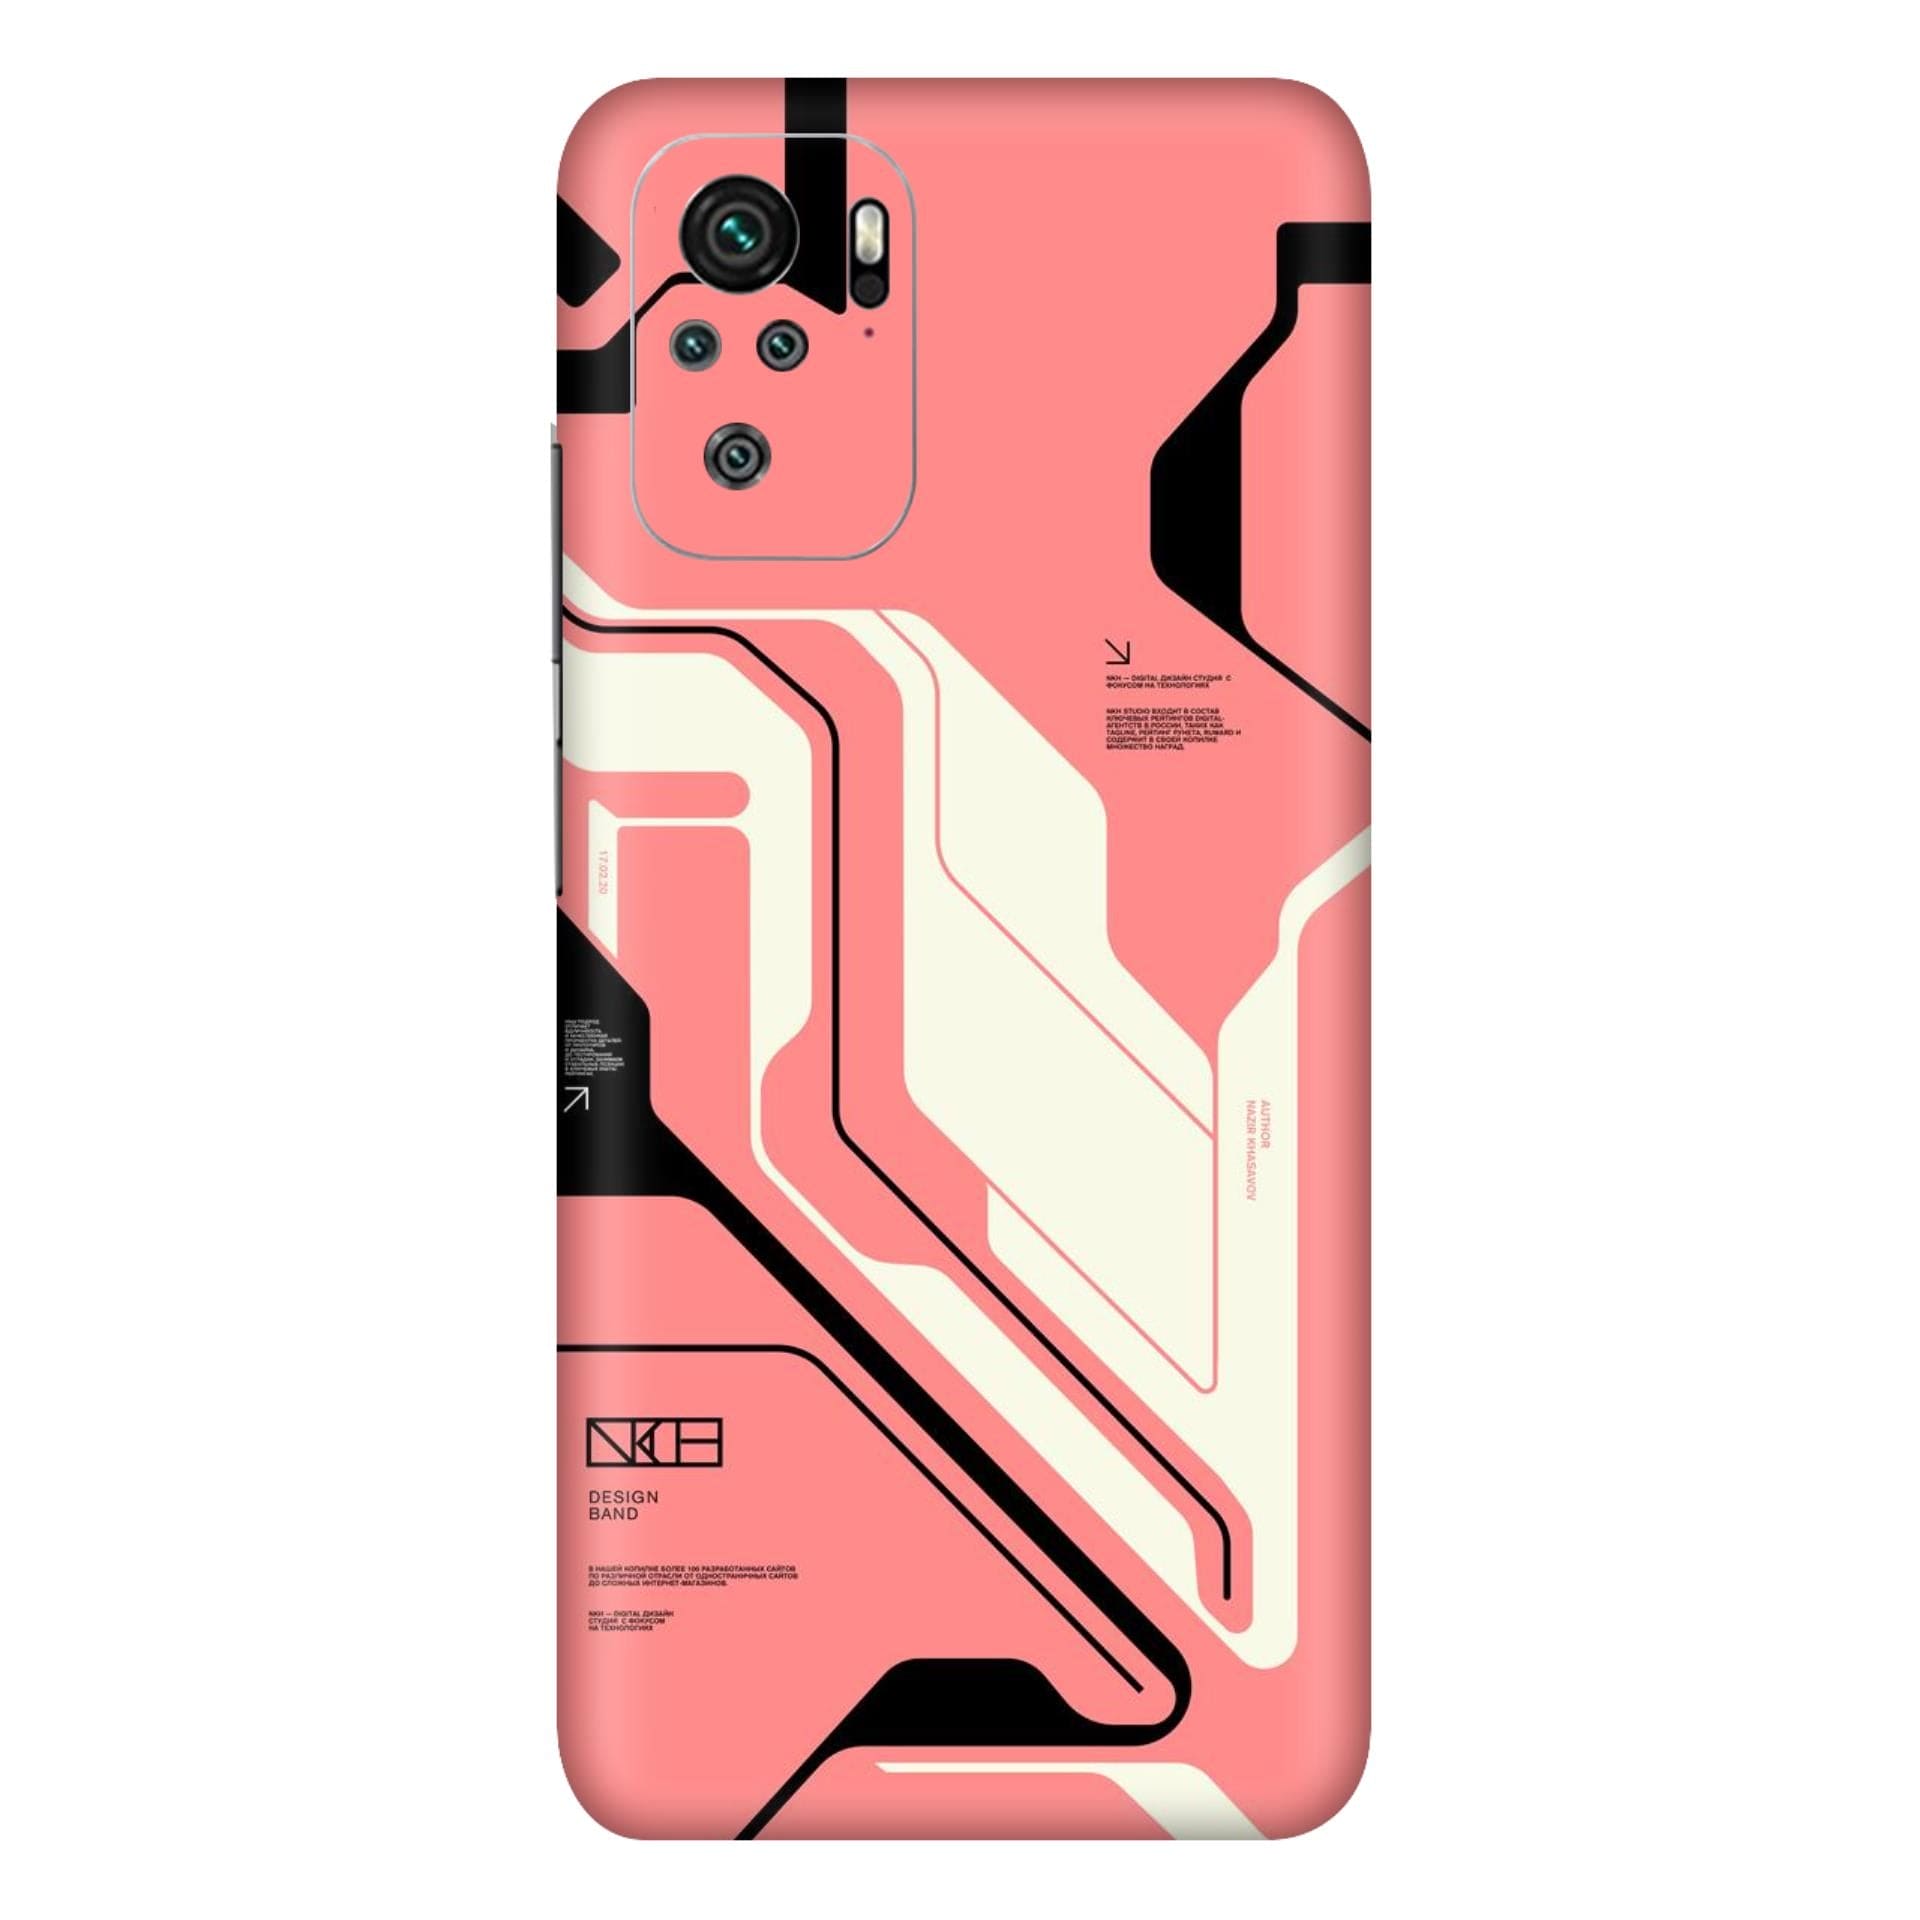 Redmi Note 10 Cyber pink skins